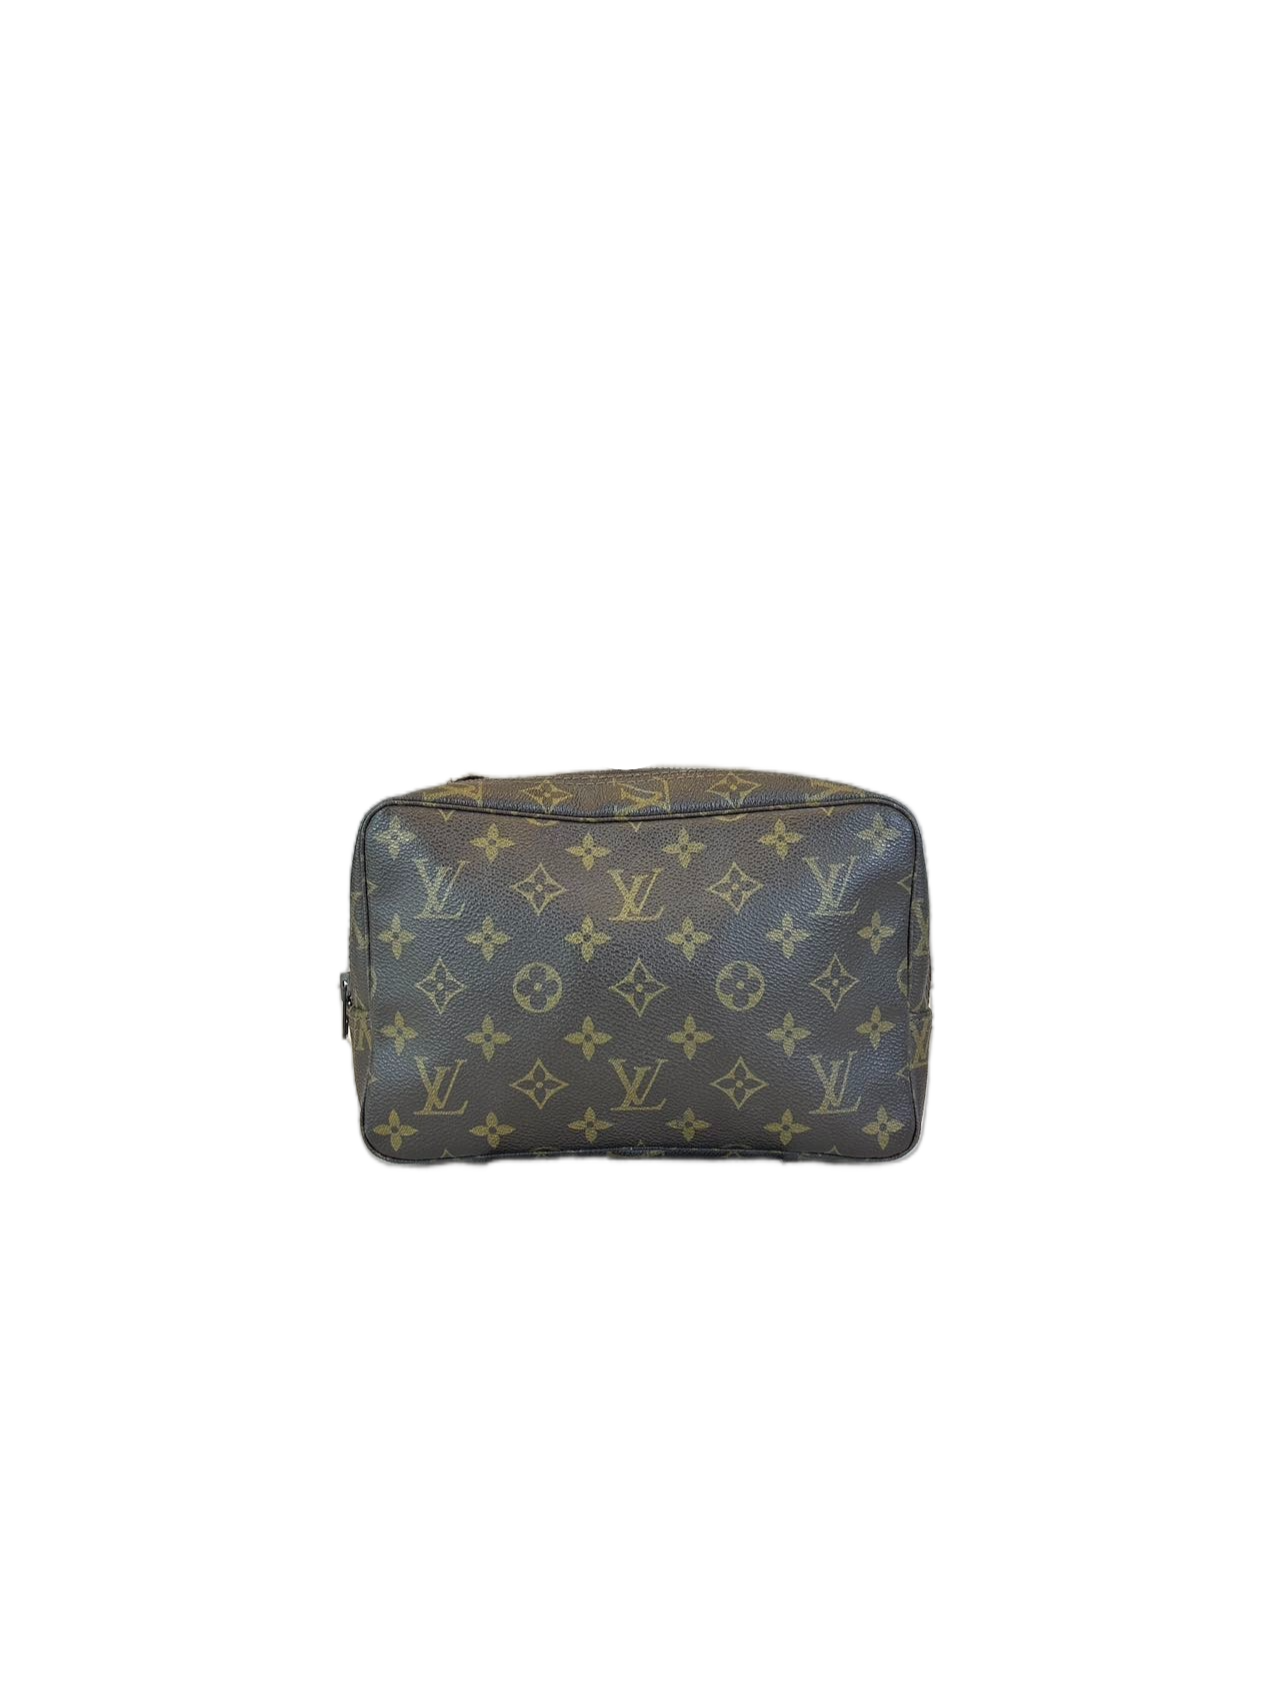 Preloved Louis Vuitton Monogram Canvas Clutch Cosmetic Bag